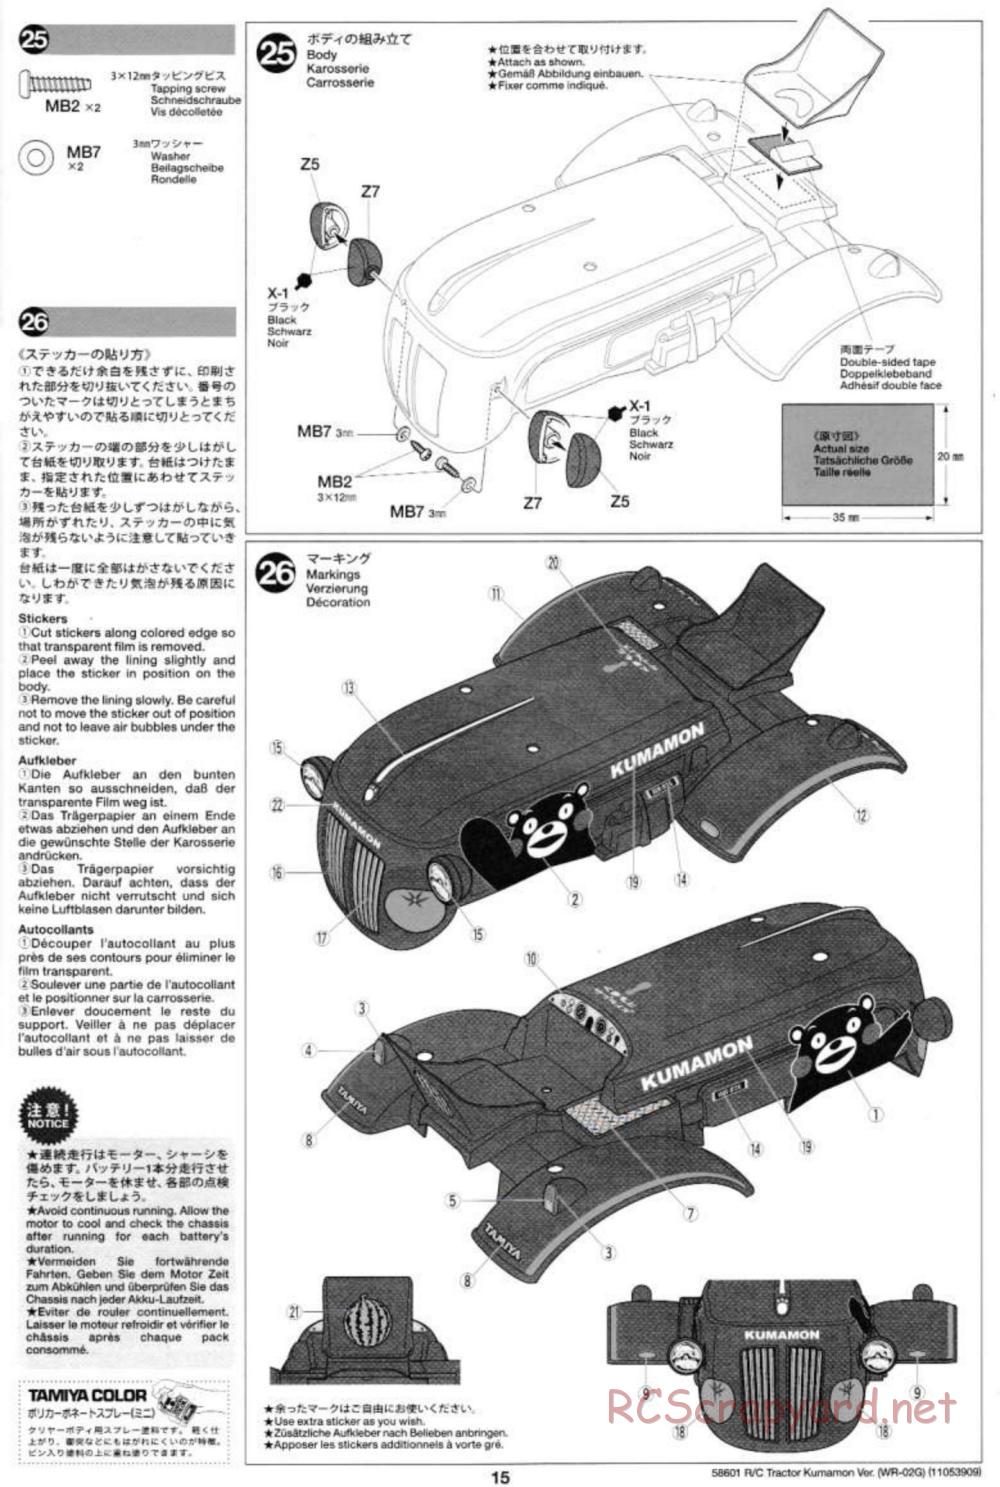 Tamiya - Tractor Kumamon Version Chassis - Manual - Page 15